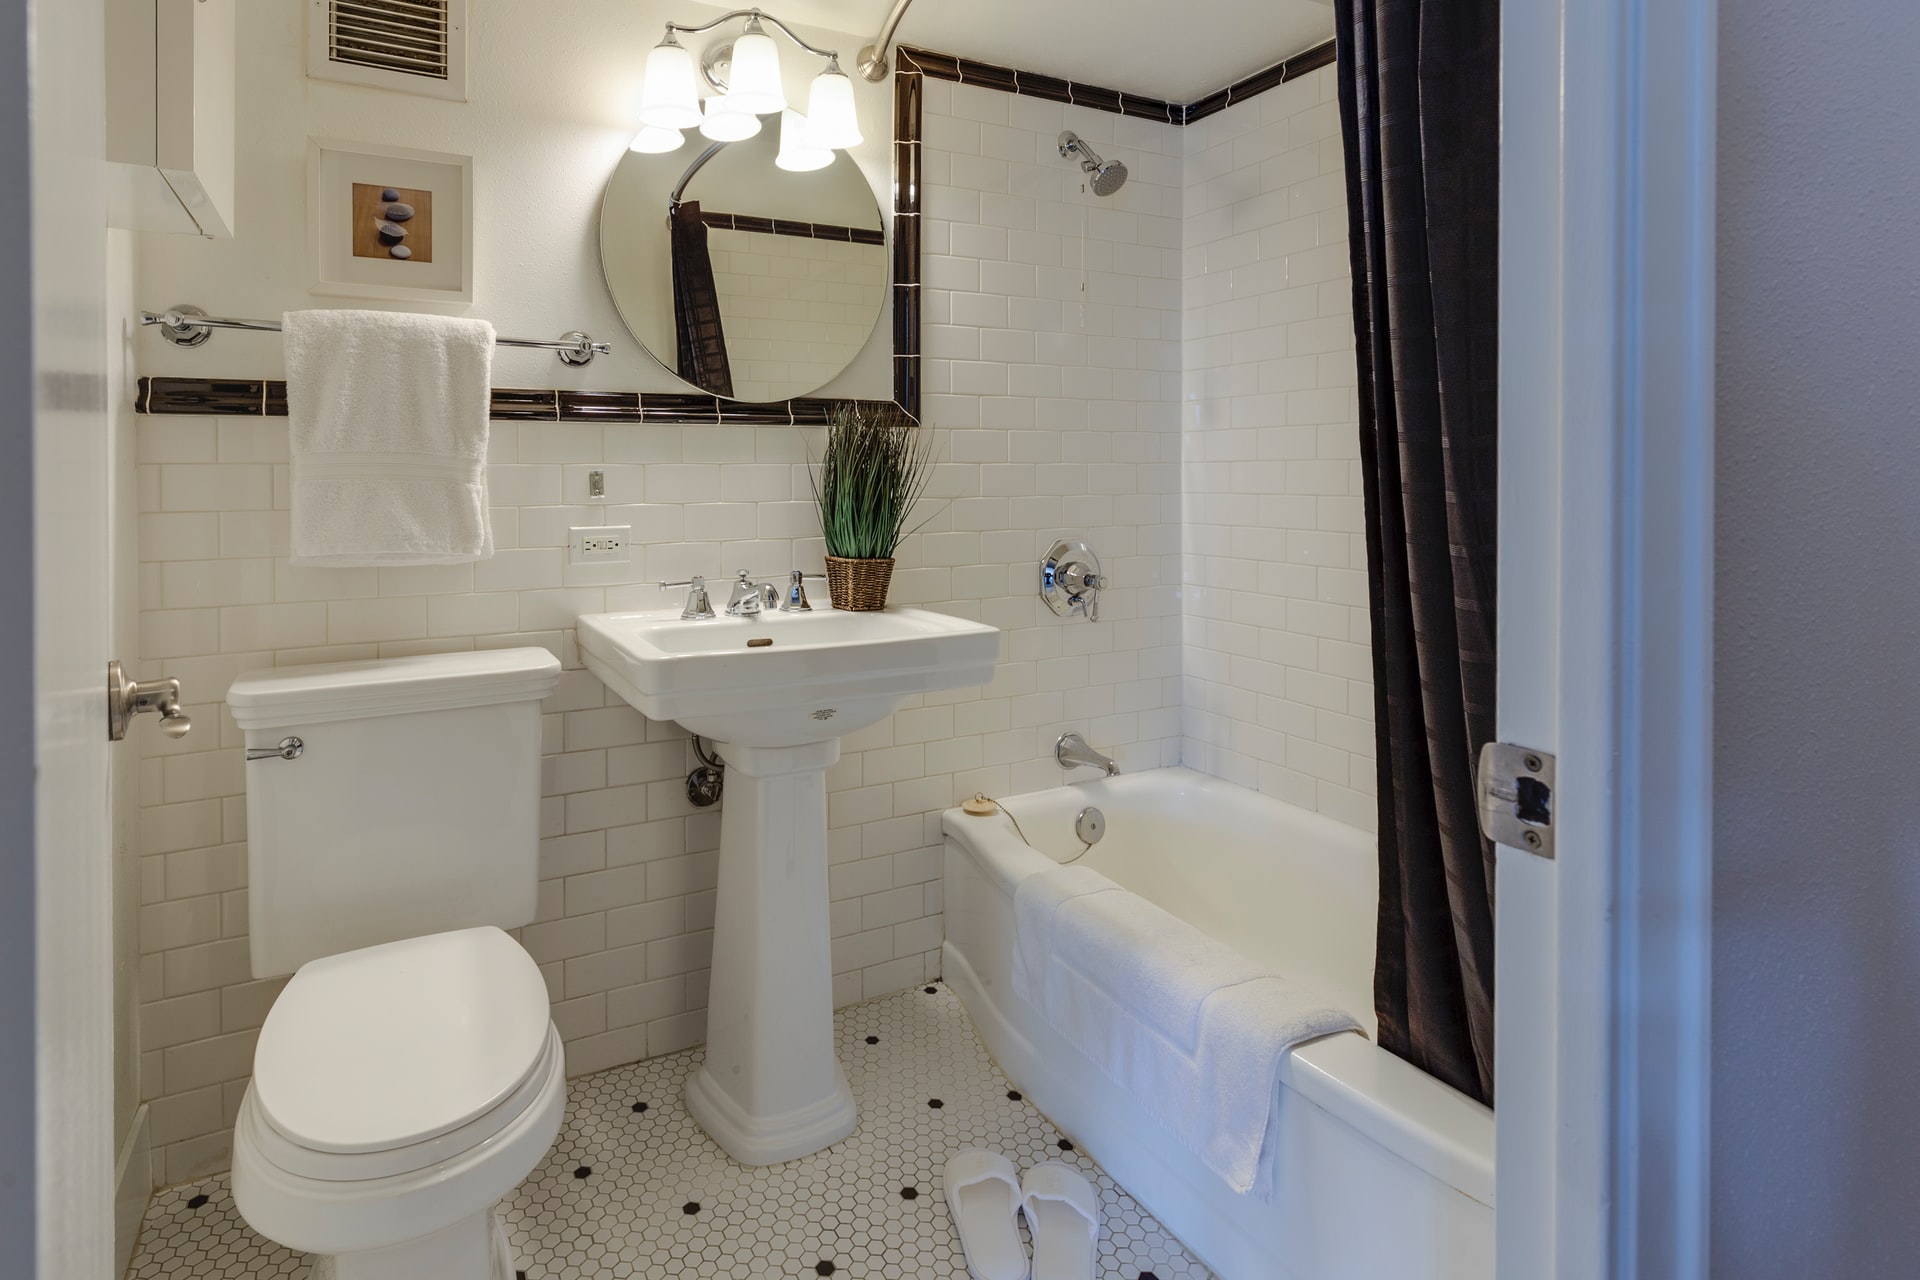 How to turn a bathroom into a cozy interior?